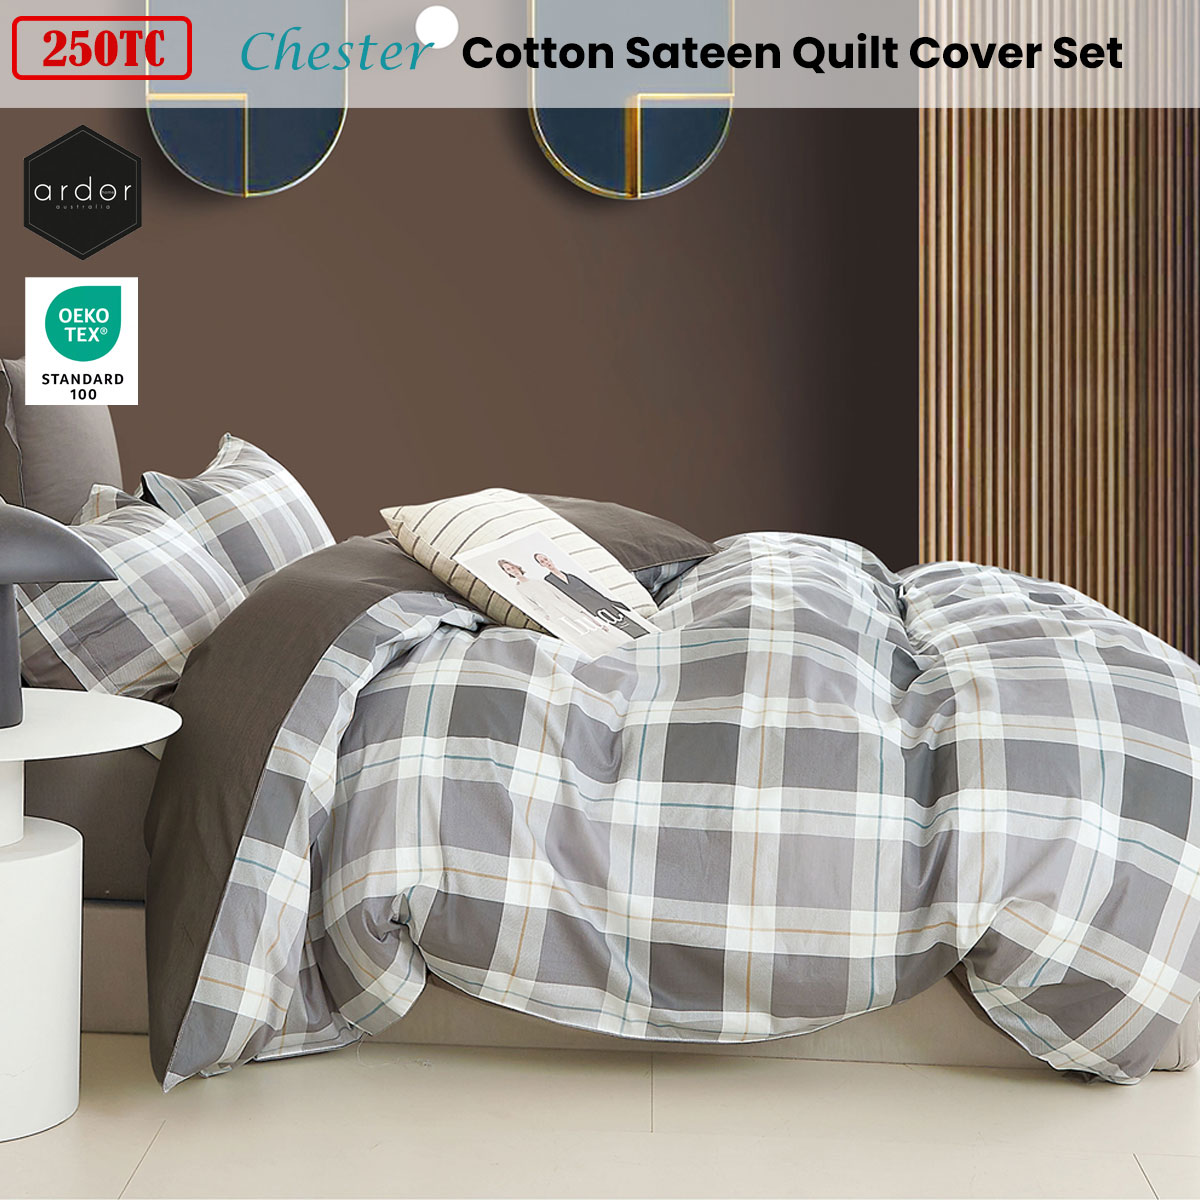 250TC Chester Plaid Cotton Sateen Quilt Cover Set by Ardor